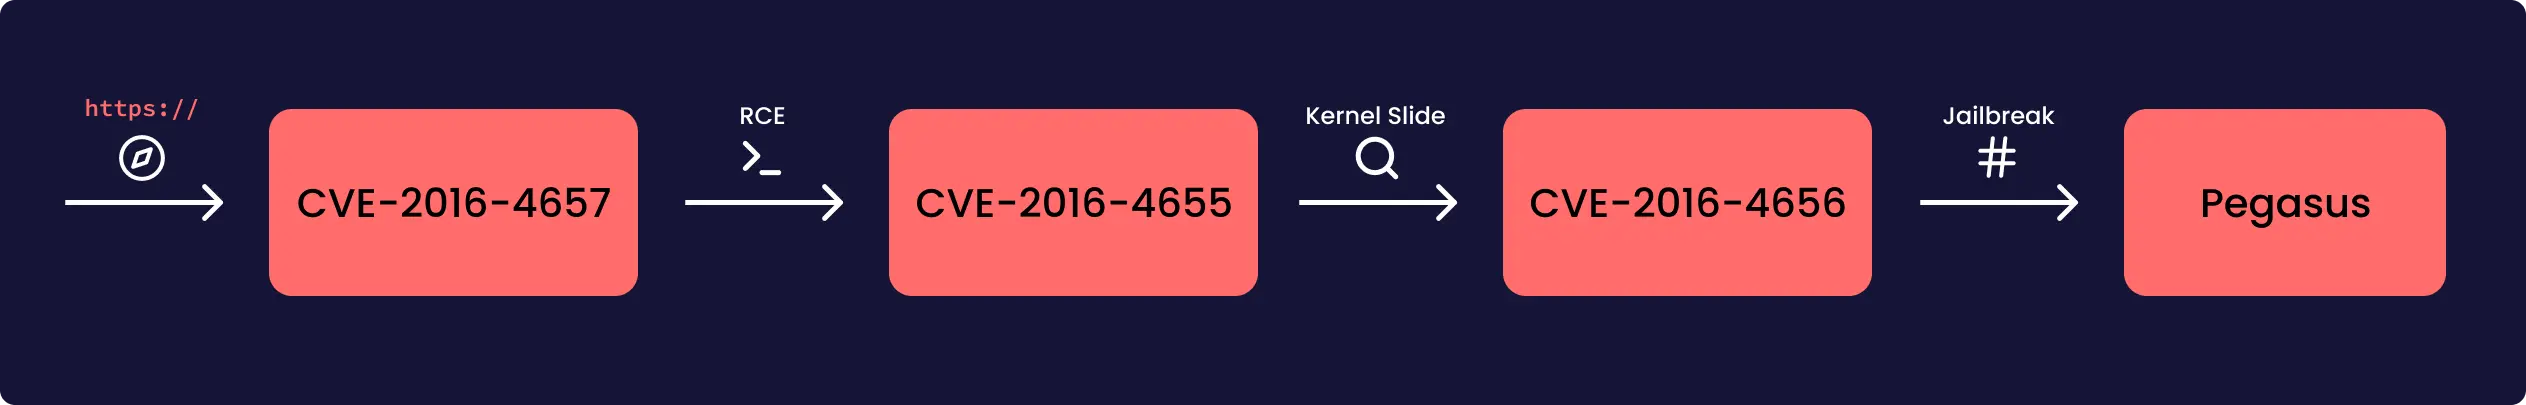 La CVE-2016-4657 permet d'obtenir une RCE, puis la CVE-2016-4655 permet de trouver le kernel slide. Enfin, la CVE-2016-4656 permet de jailbreak l'appareil et d'installer Pegasus